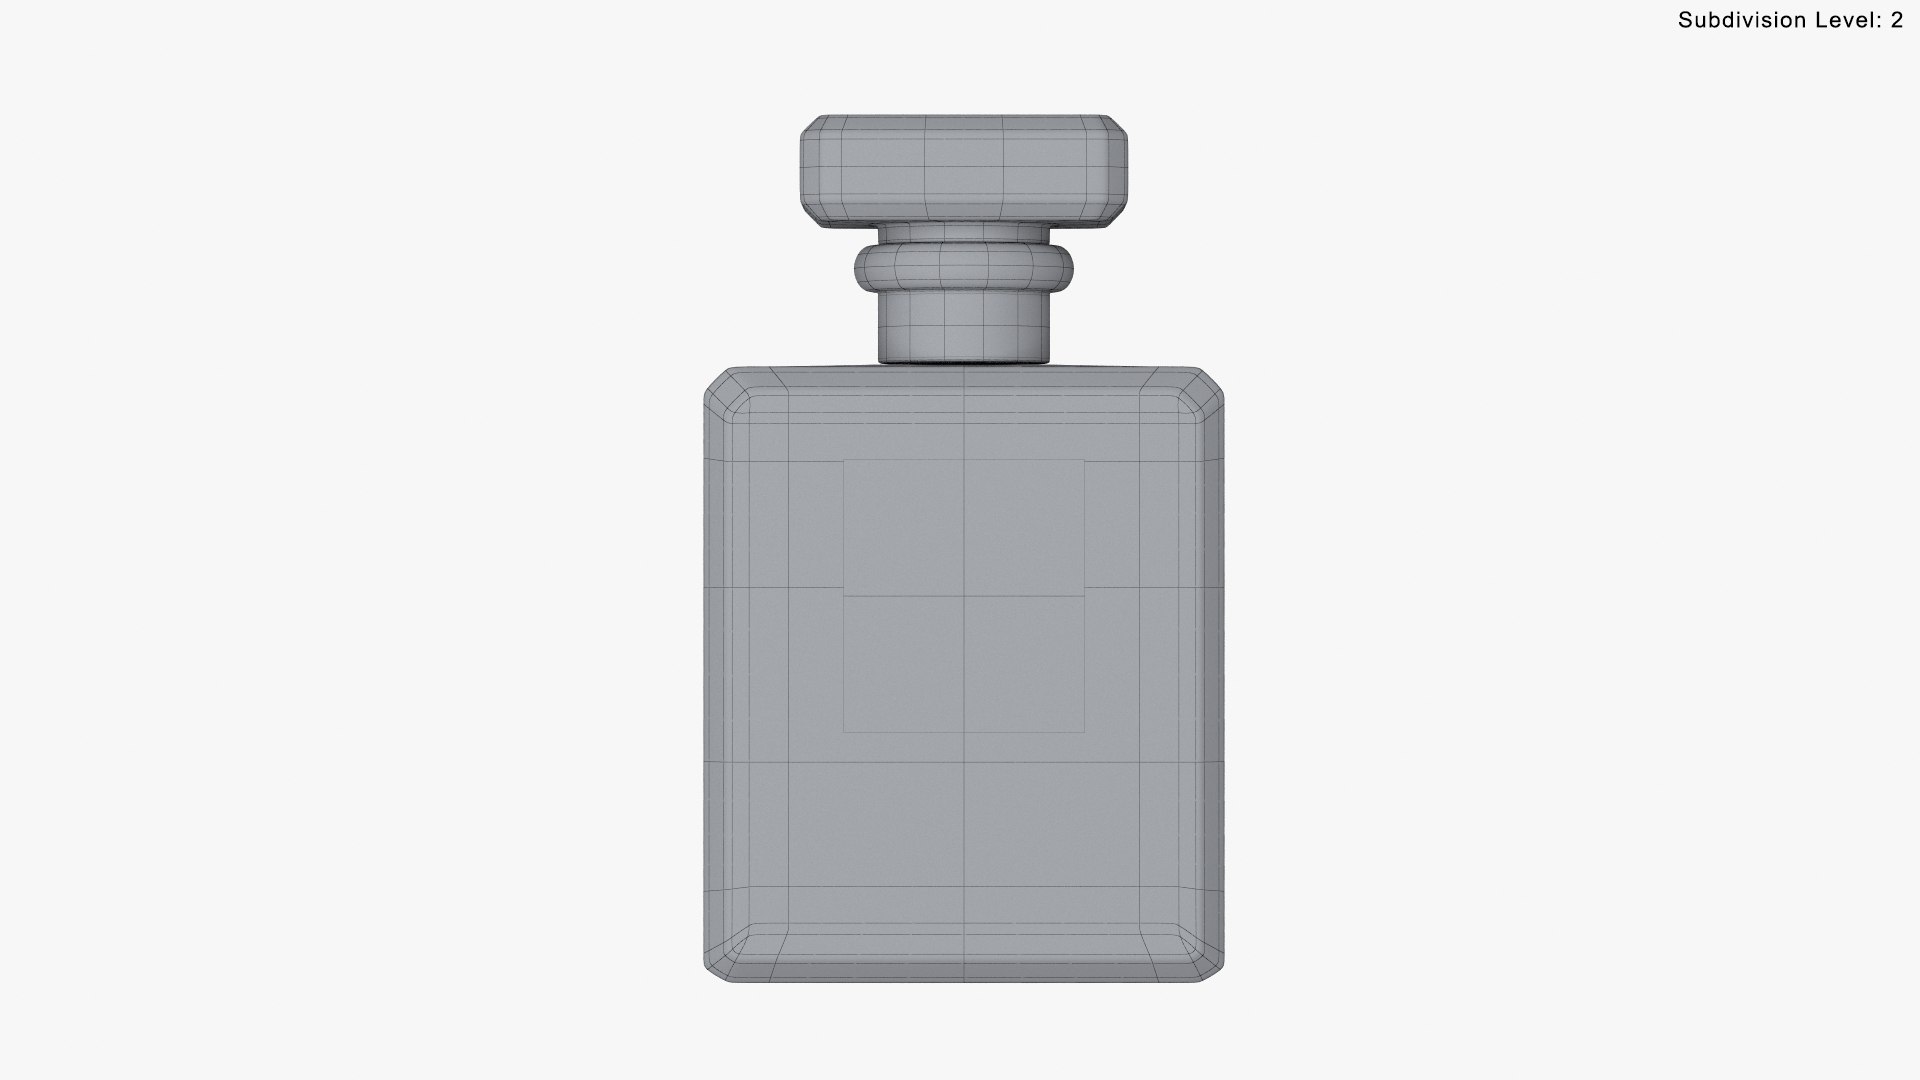 chanel coco noir eau de parfum 3D Model in Other 3DExport